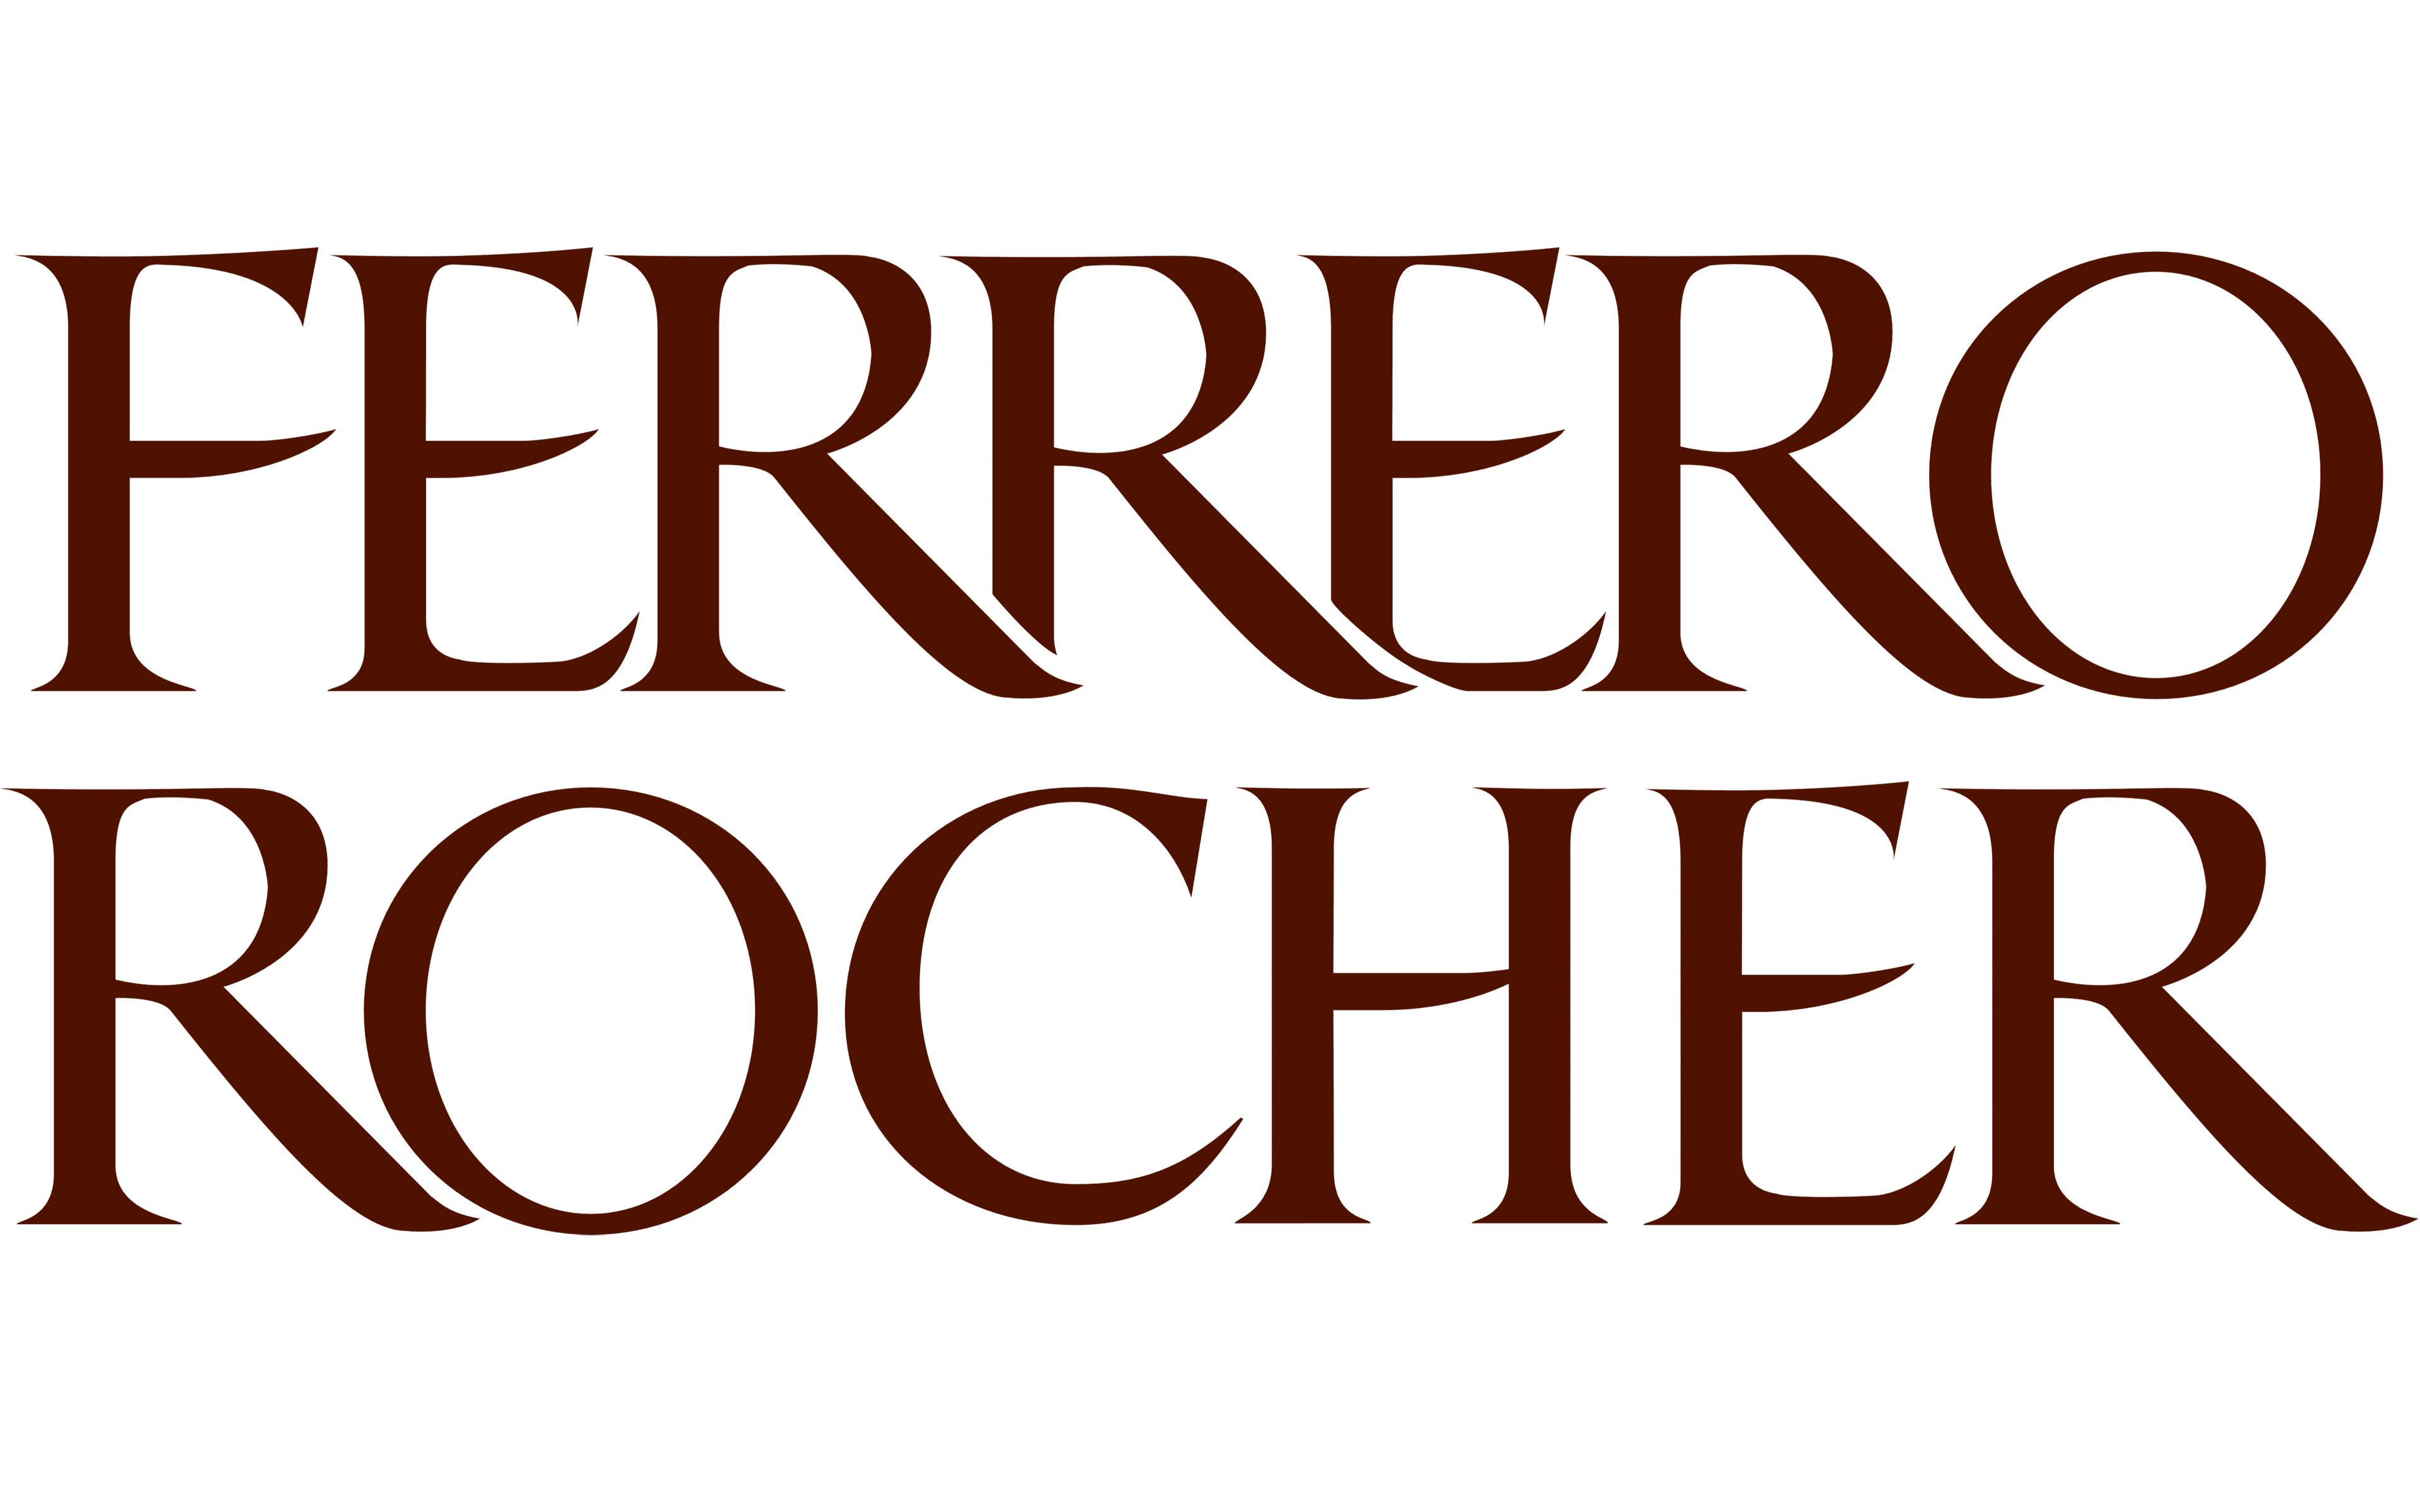 Ferrero Rocher - My American Shop